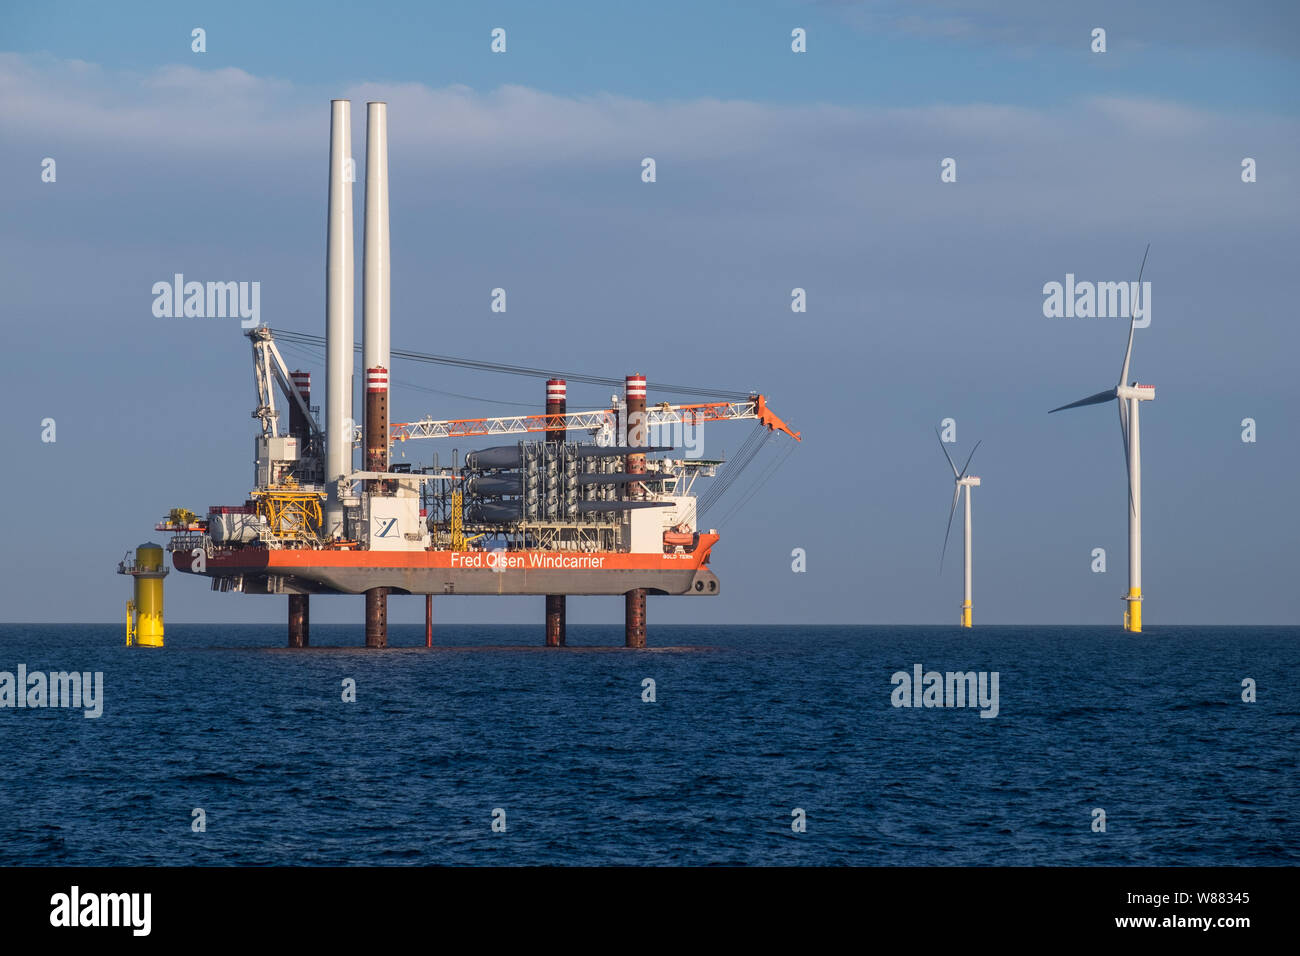 A wind turbine installation vessel, Bold Tern, working on erecting Siemens wind turbines on Hornsea Project One Offshore Wind Farm Stock Photo